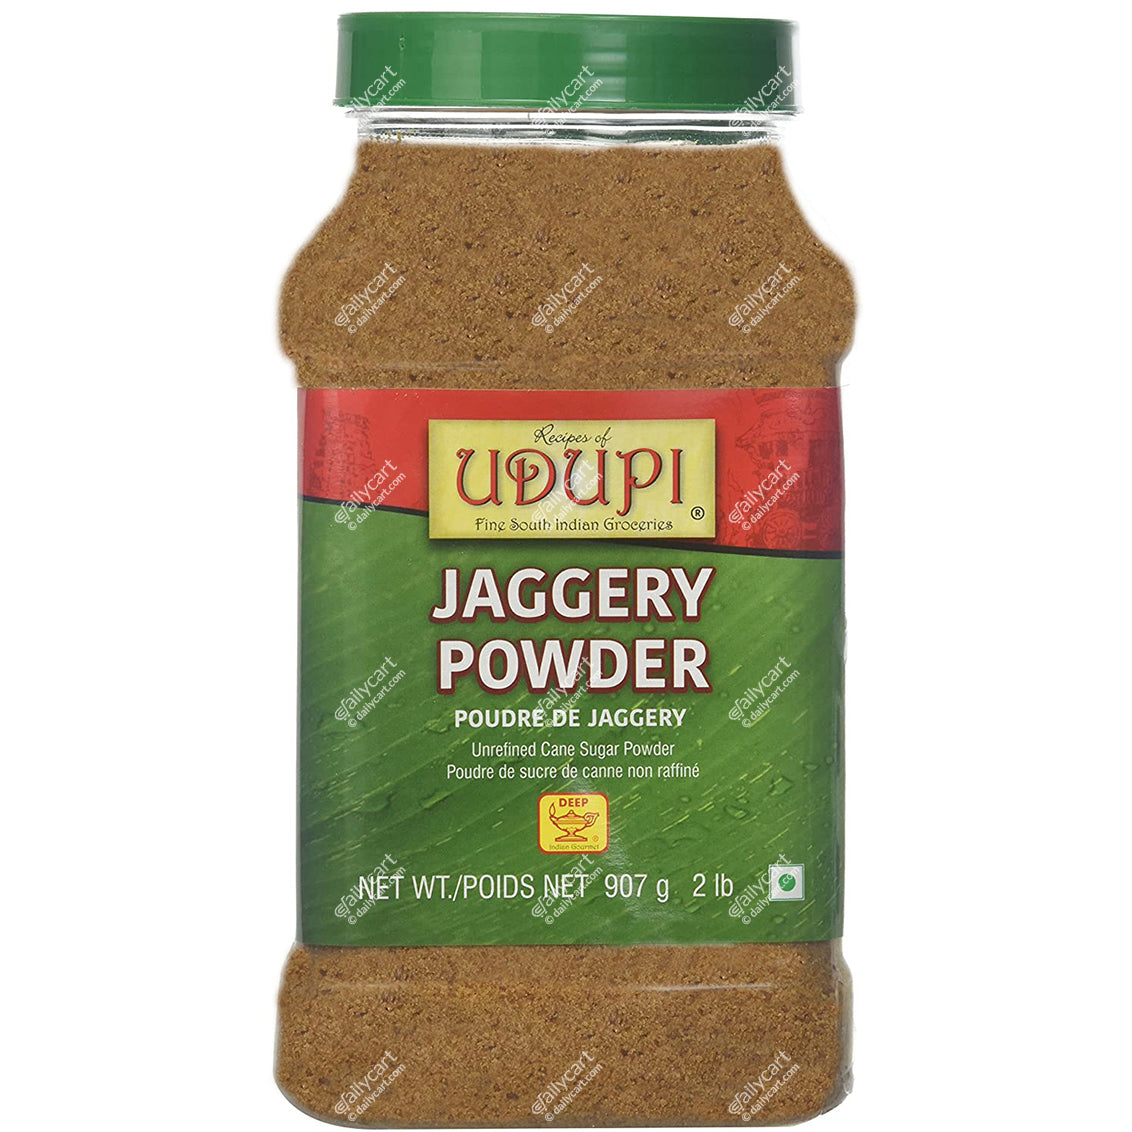 Deep Jaggery Powder, 2 lb